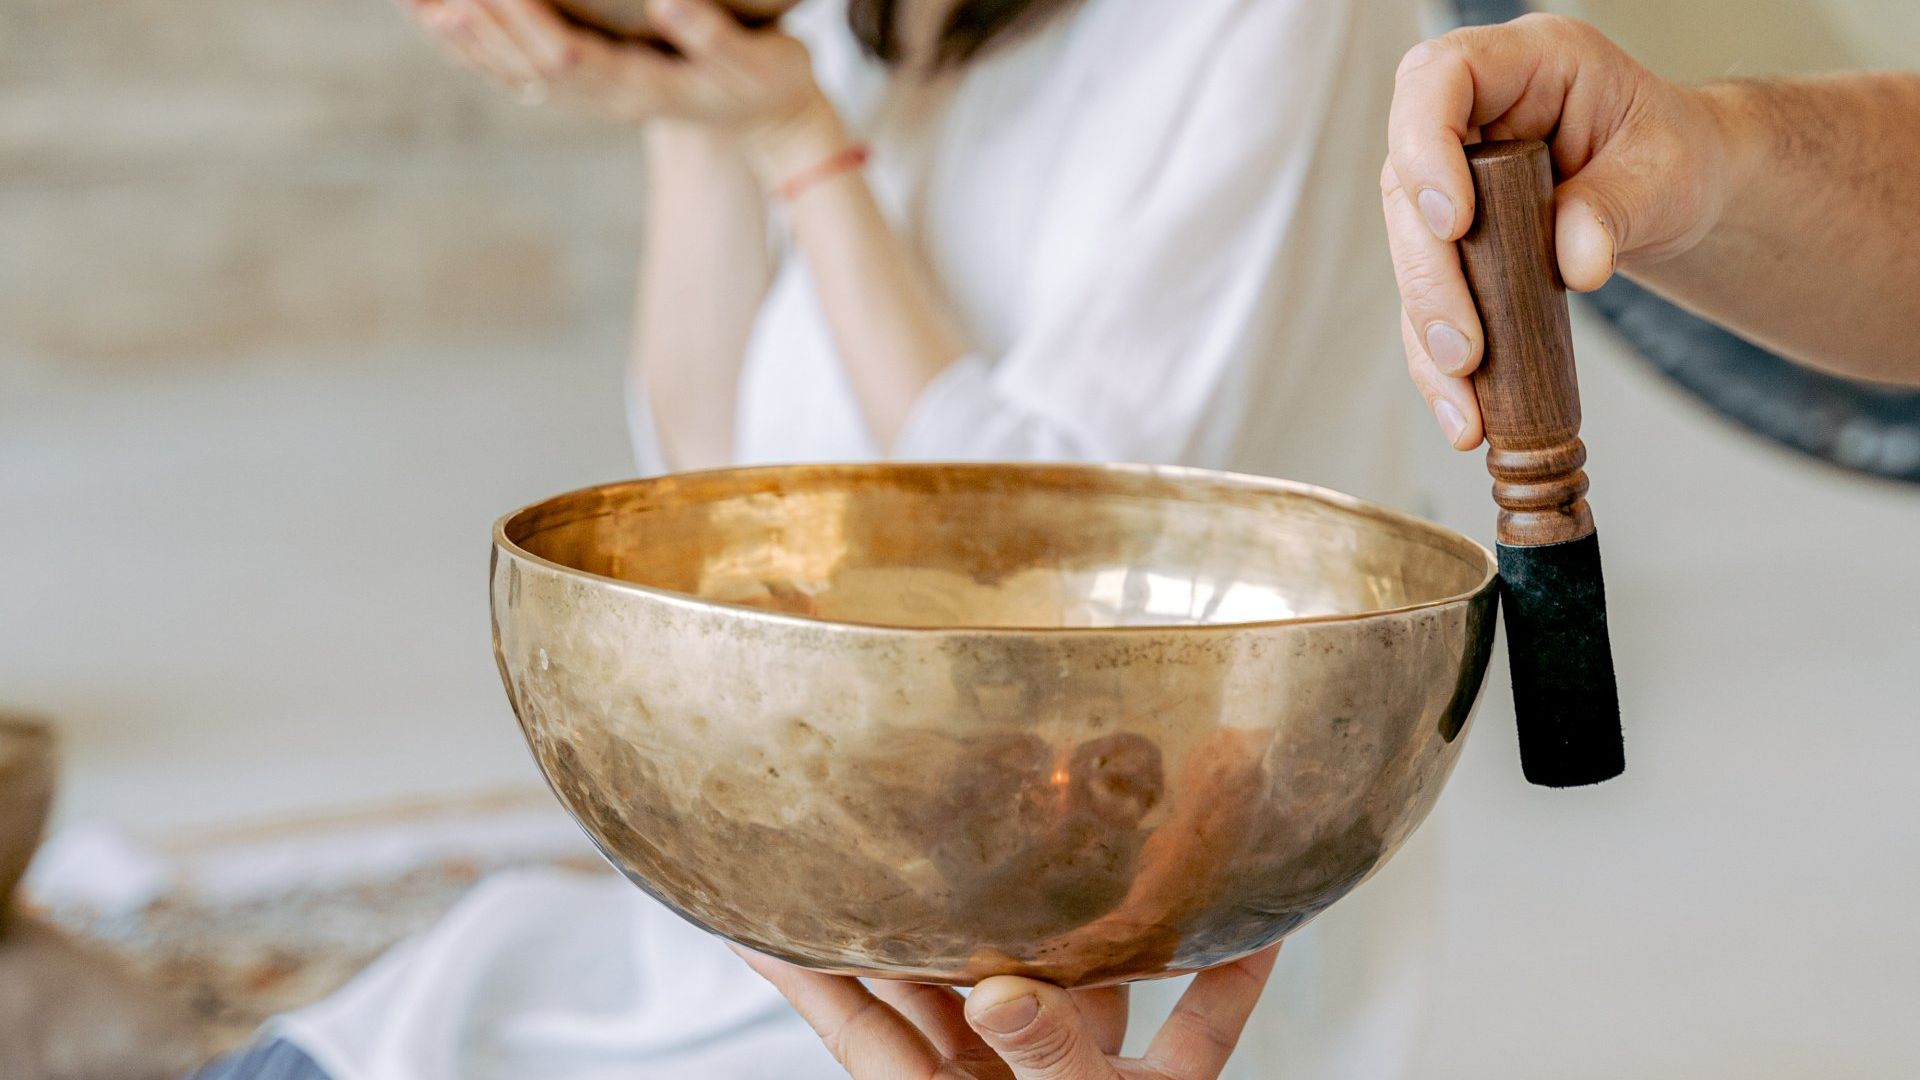 A sound healing bowl